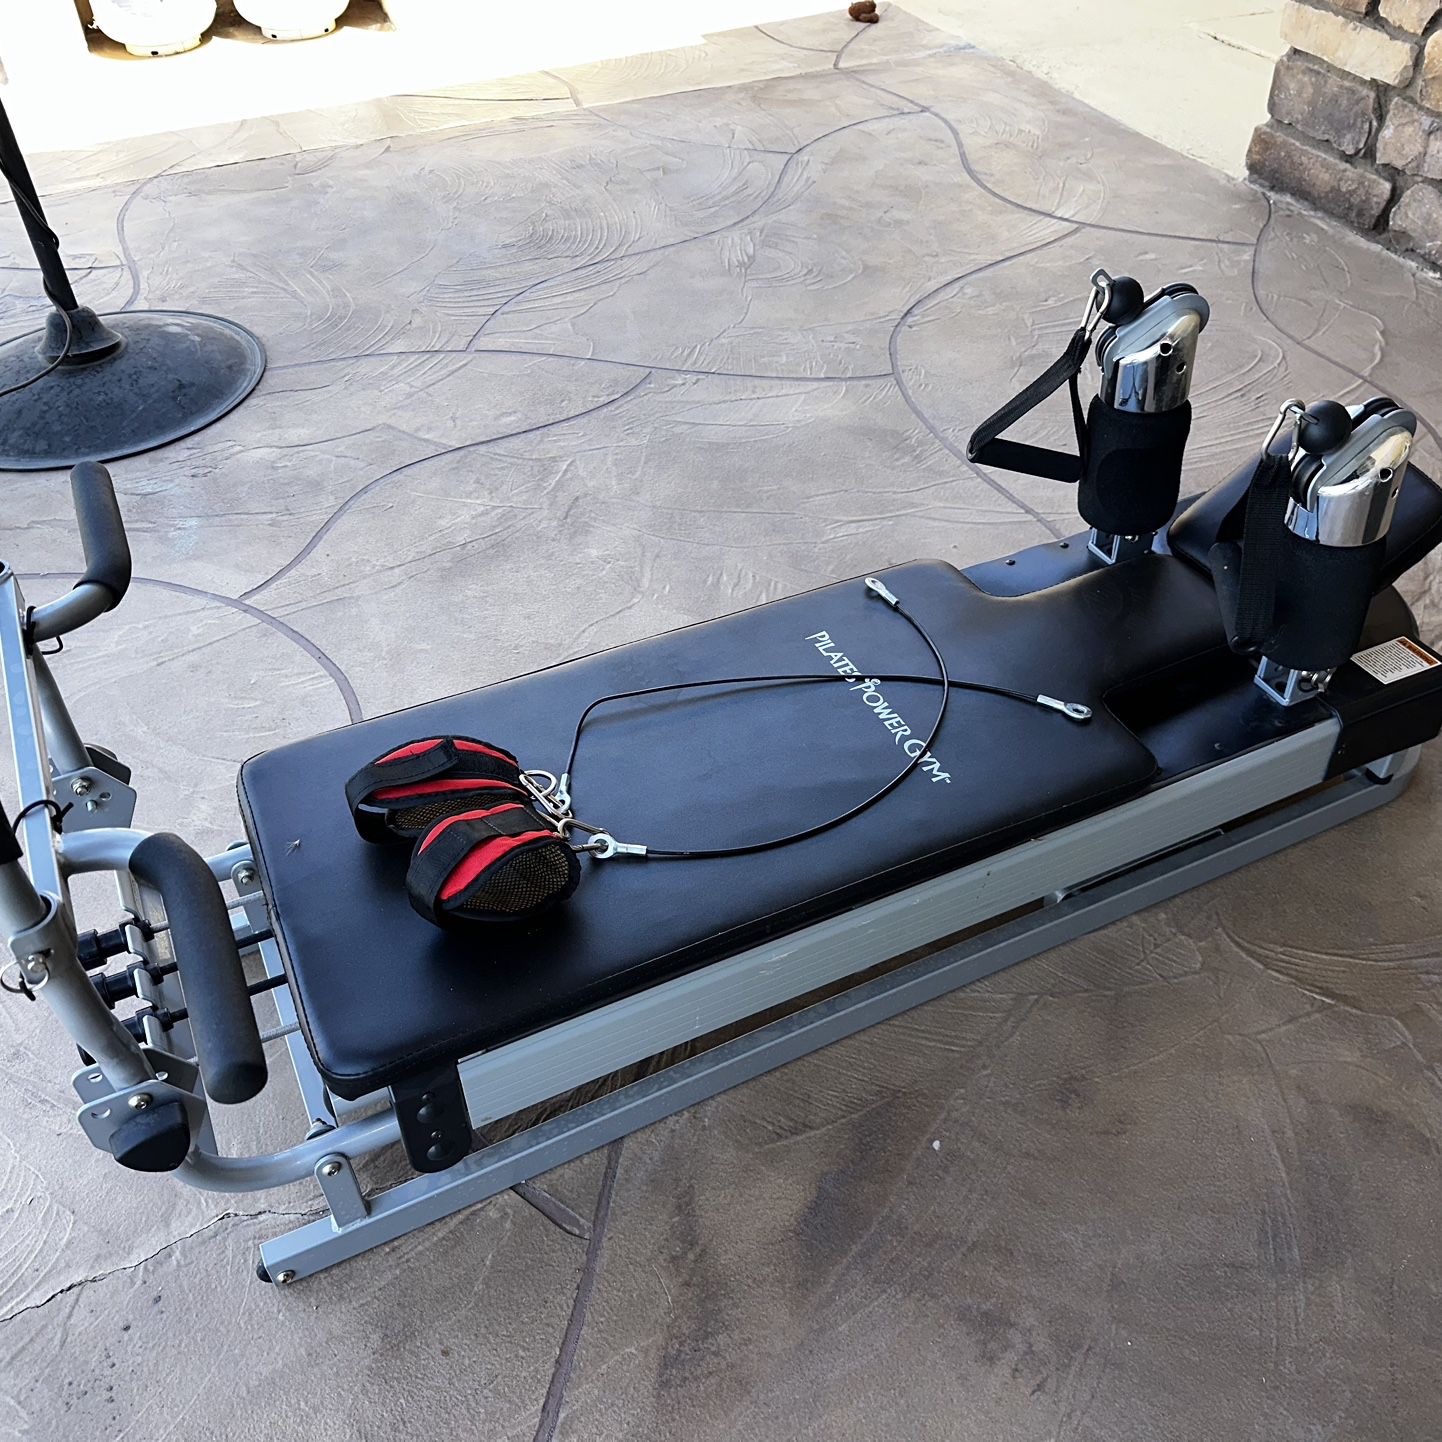 Pilates Power Gym for Sale in Phoenix, AZ - OfferUp